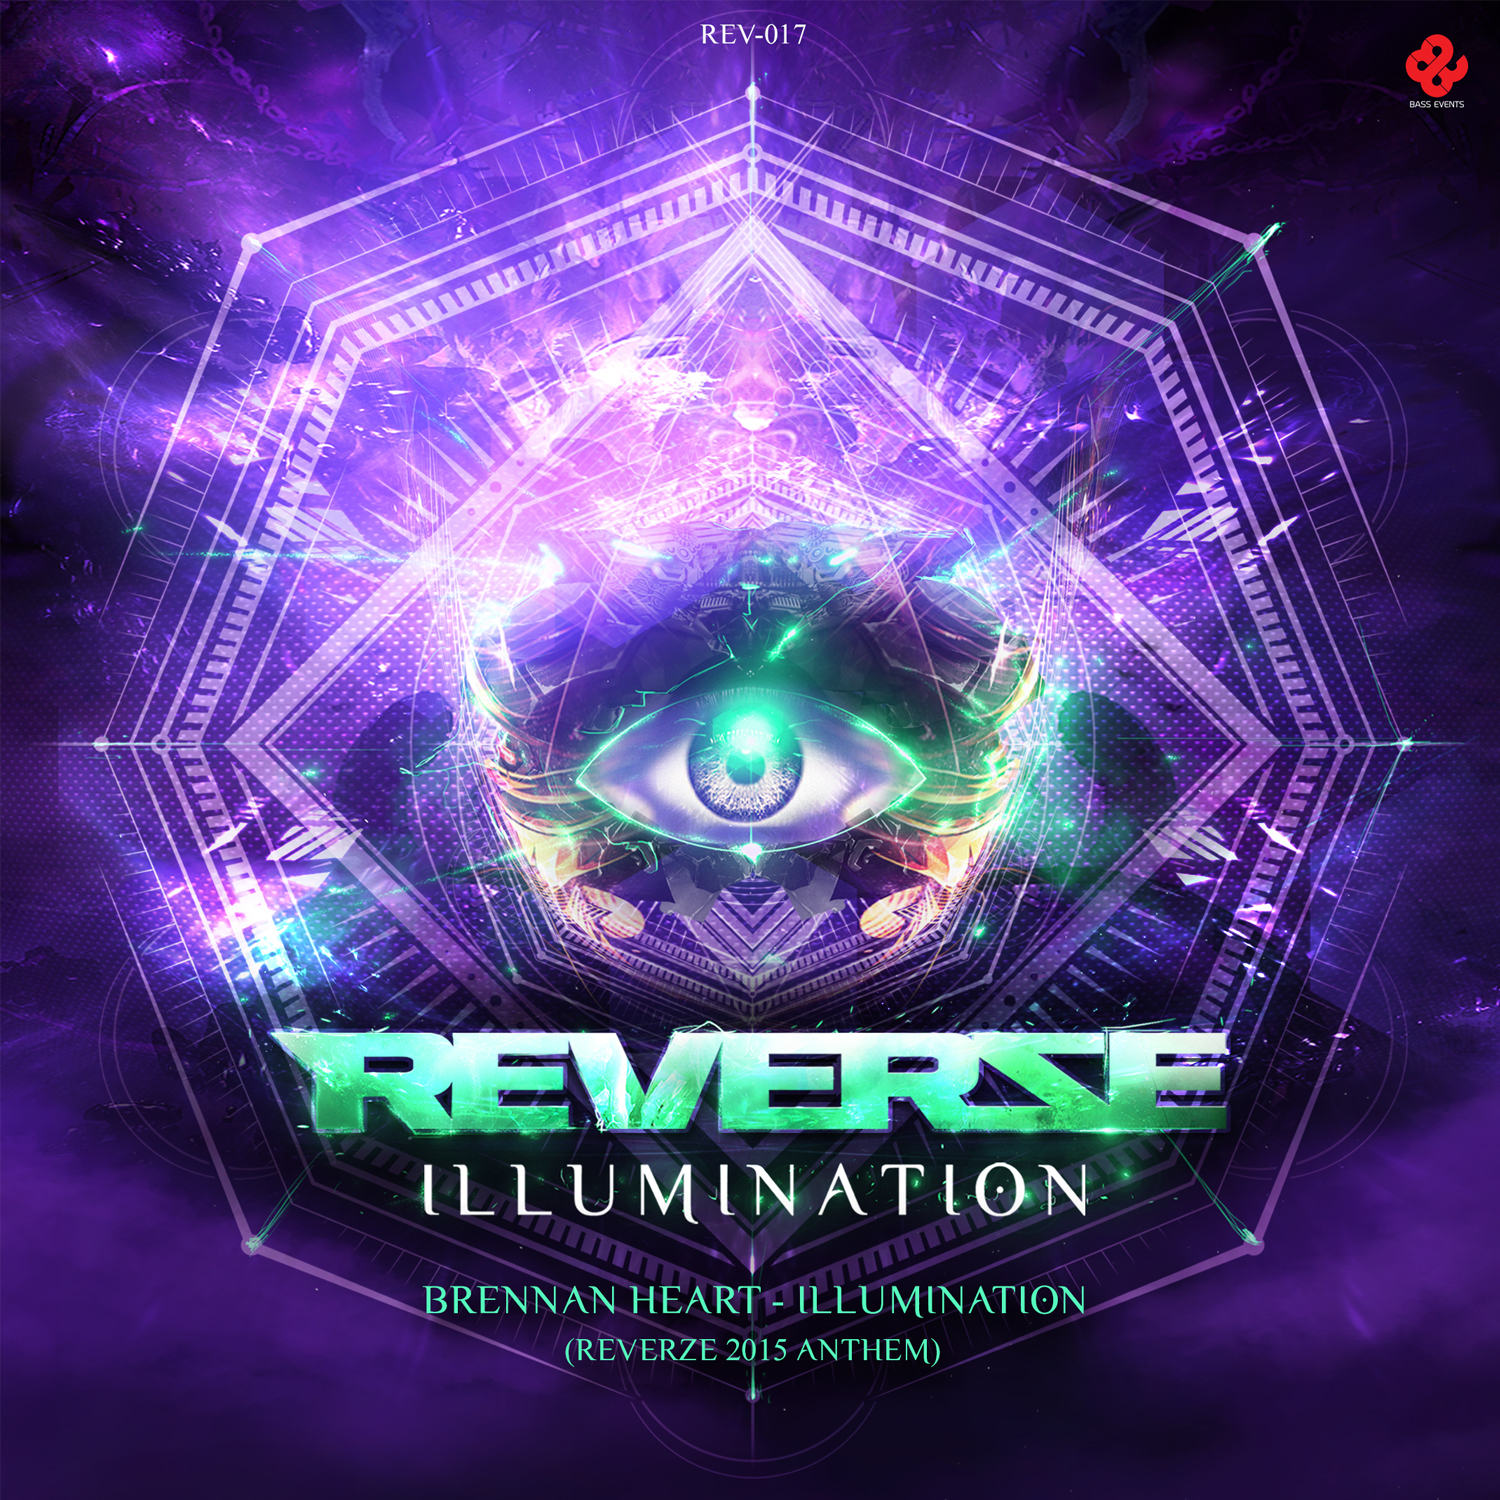 Illumination (Reverze 2015 Anthem)